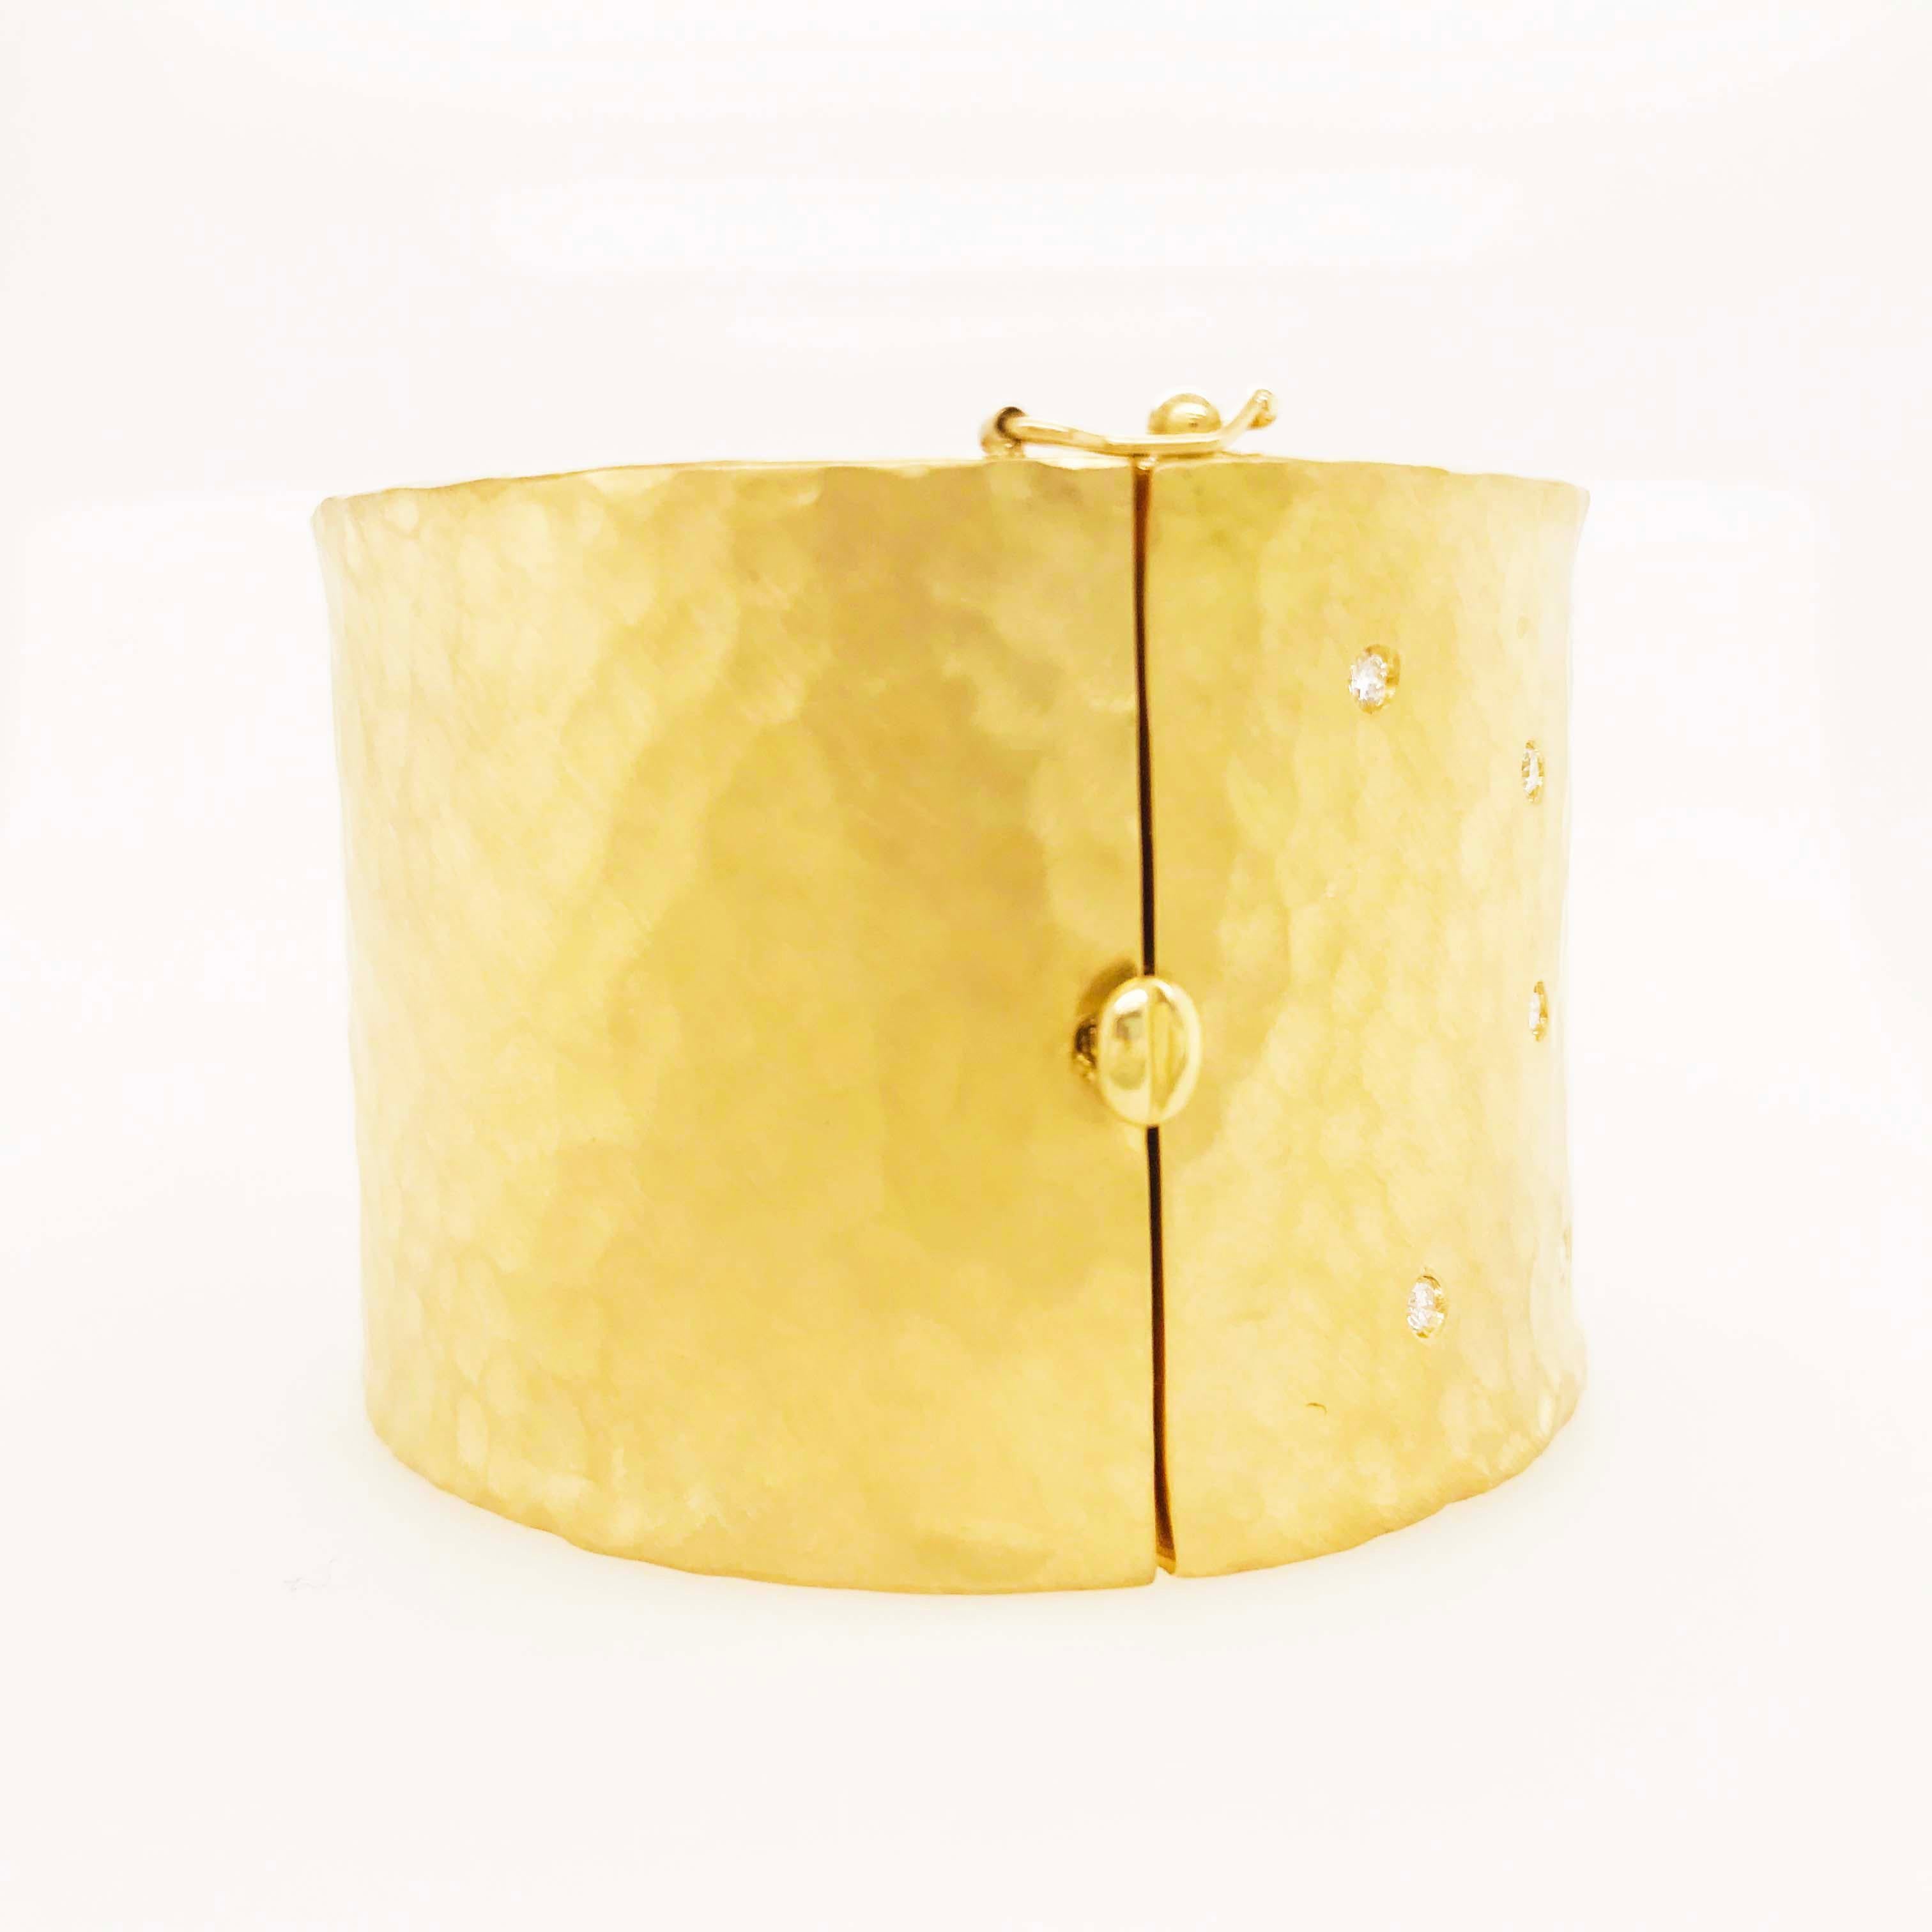 Diamond Gold Cuff Bracelet in 18 Karat Yellow Gold with 1.00 Carat Diamond 1